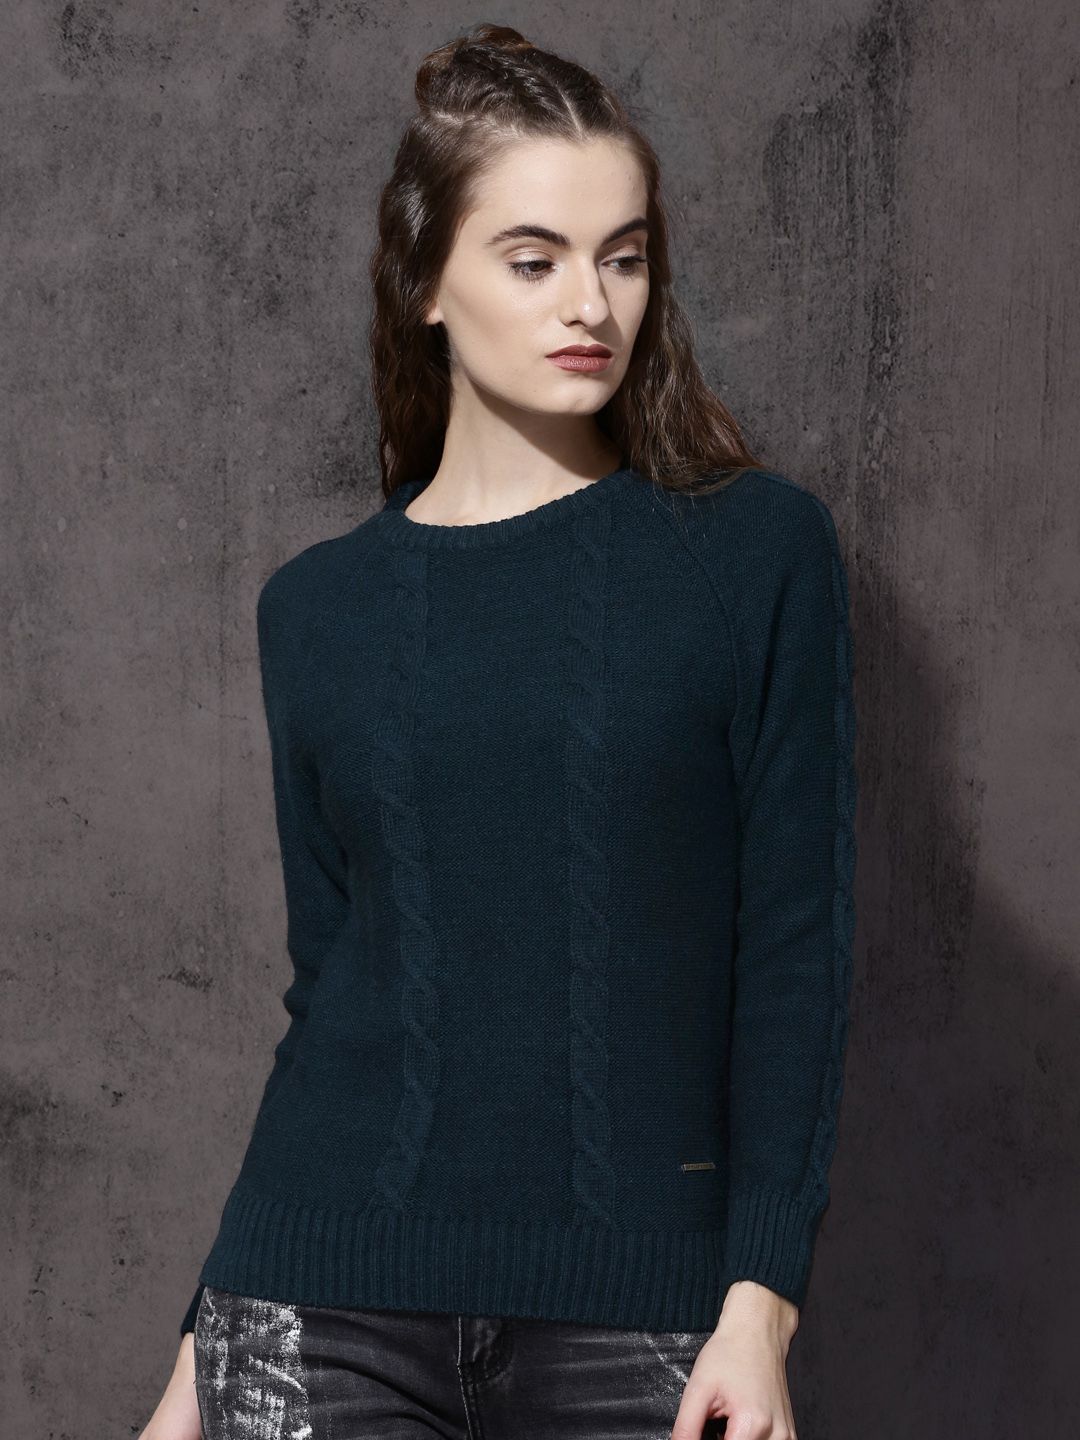 Roadster Women Teal Blue Self-Design Sweater Price in India